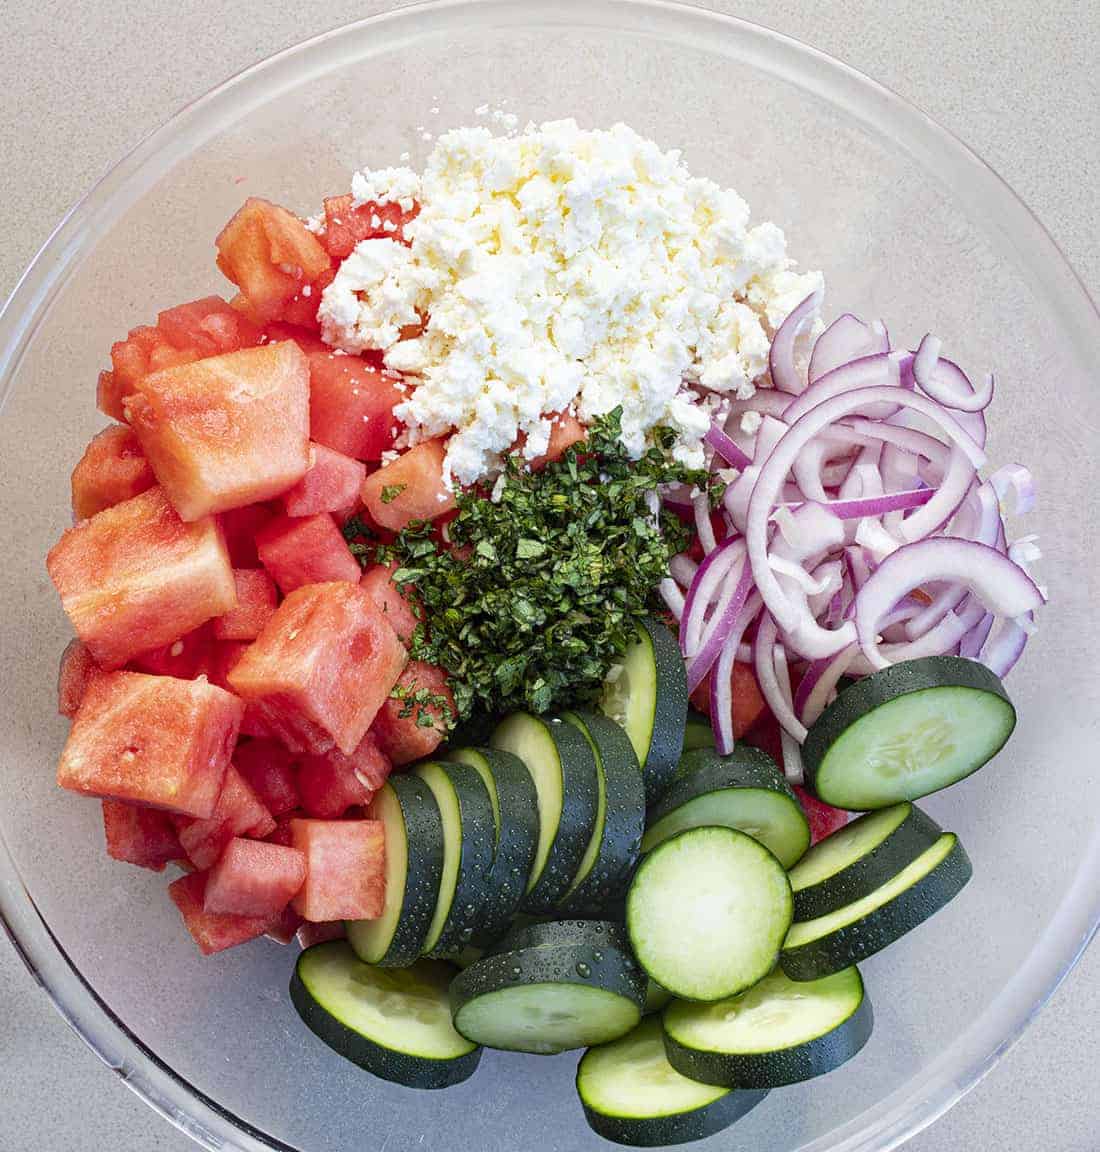 Ingredients for Watermelon Feta Salad